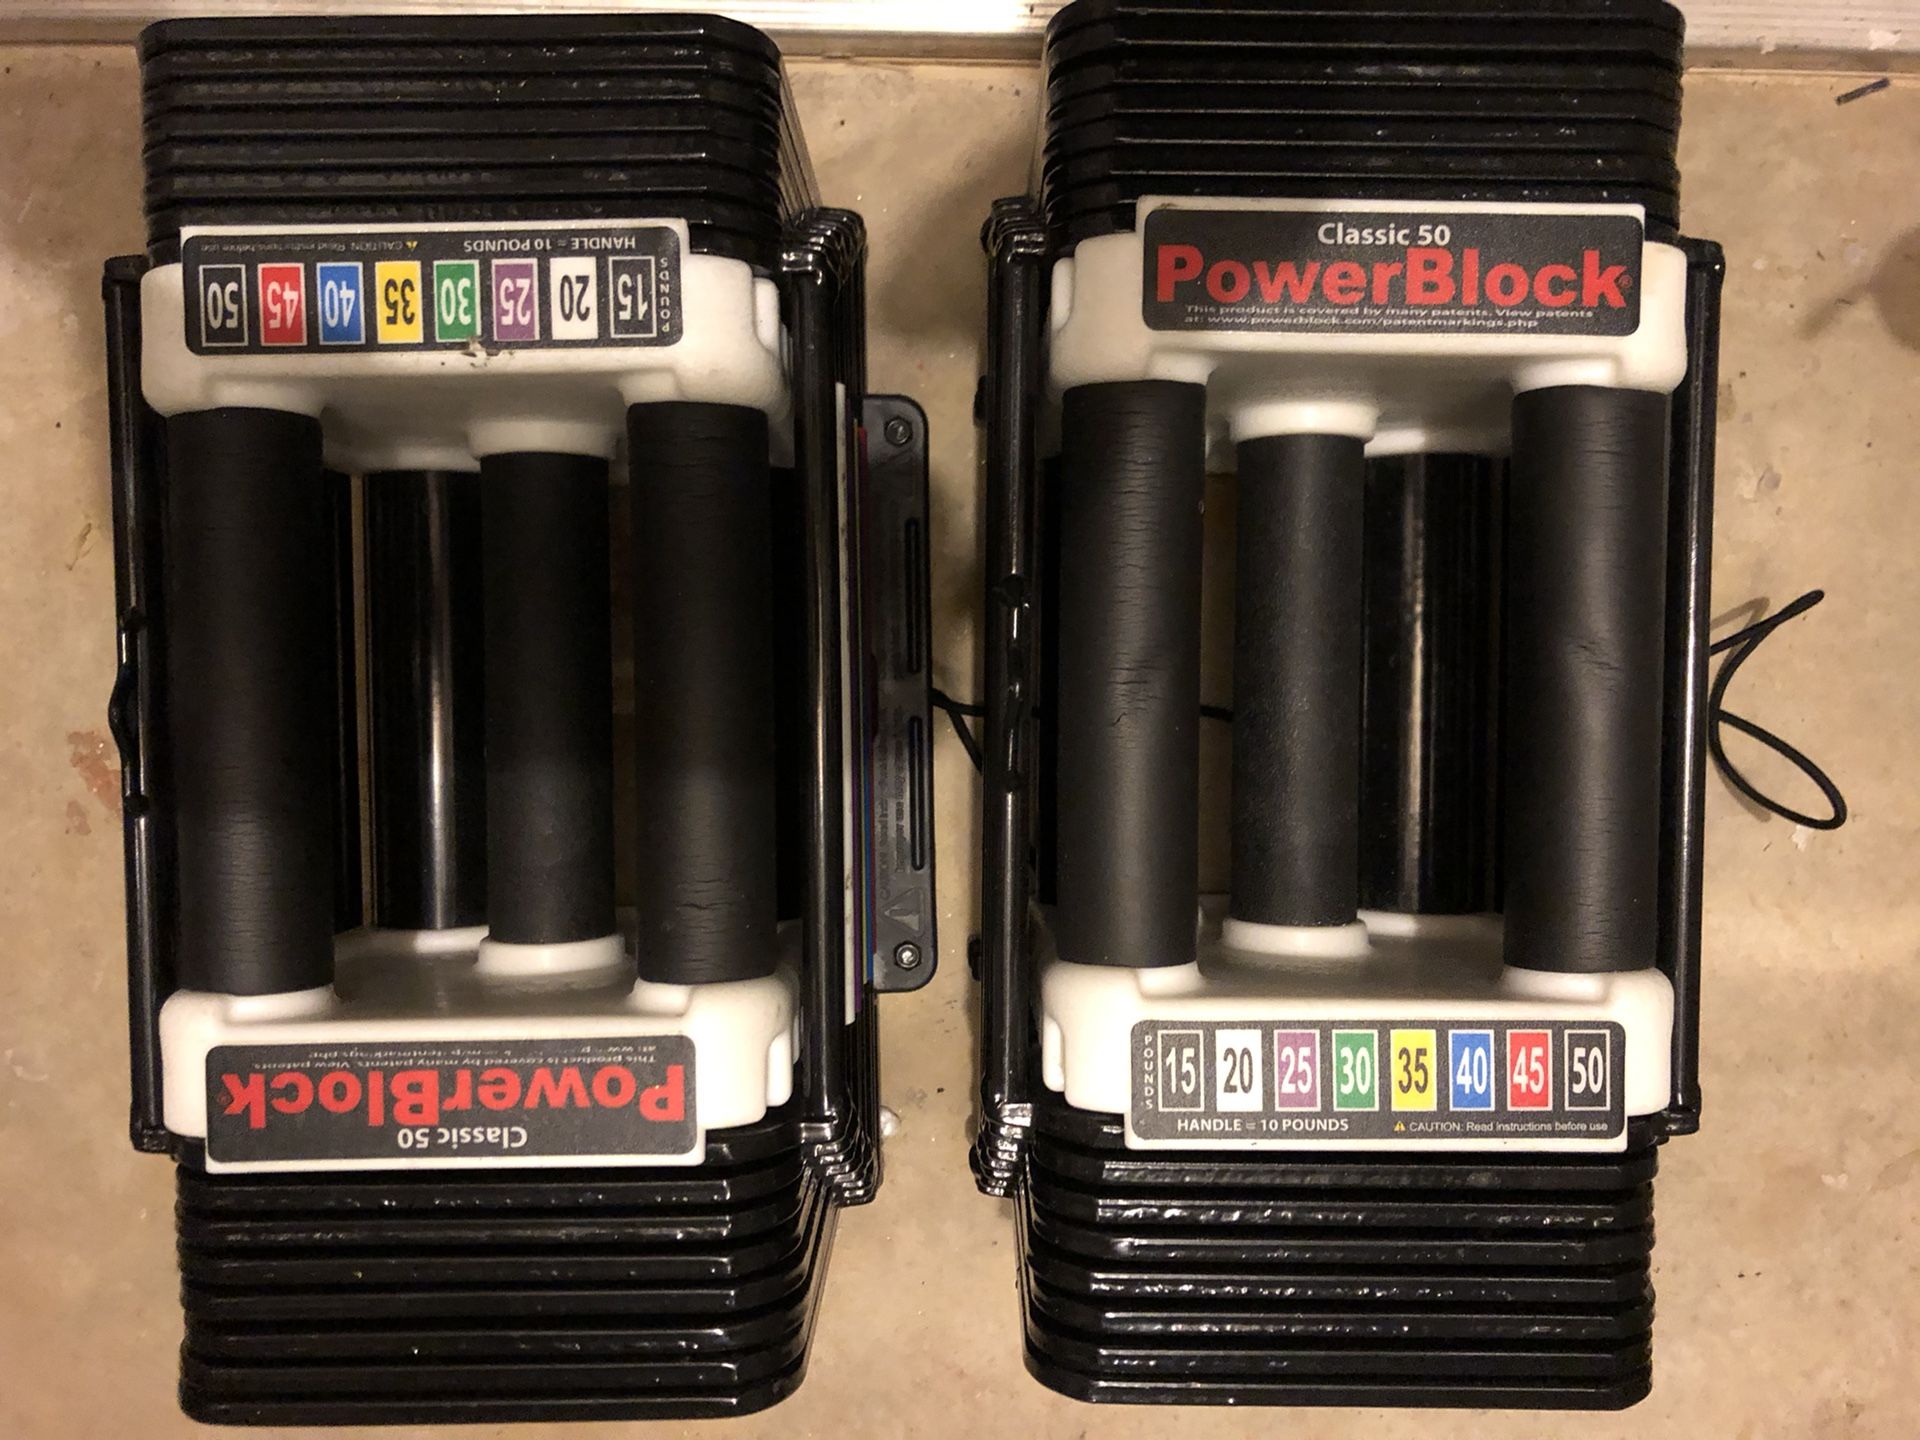 PowerBlock weights - set of 2